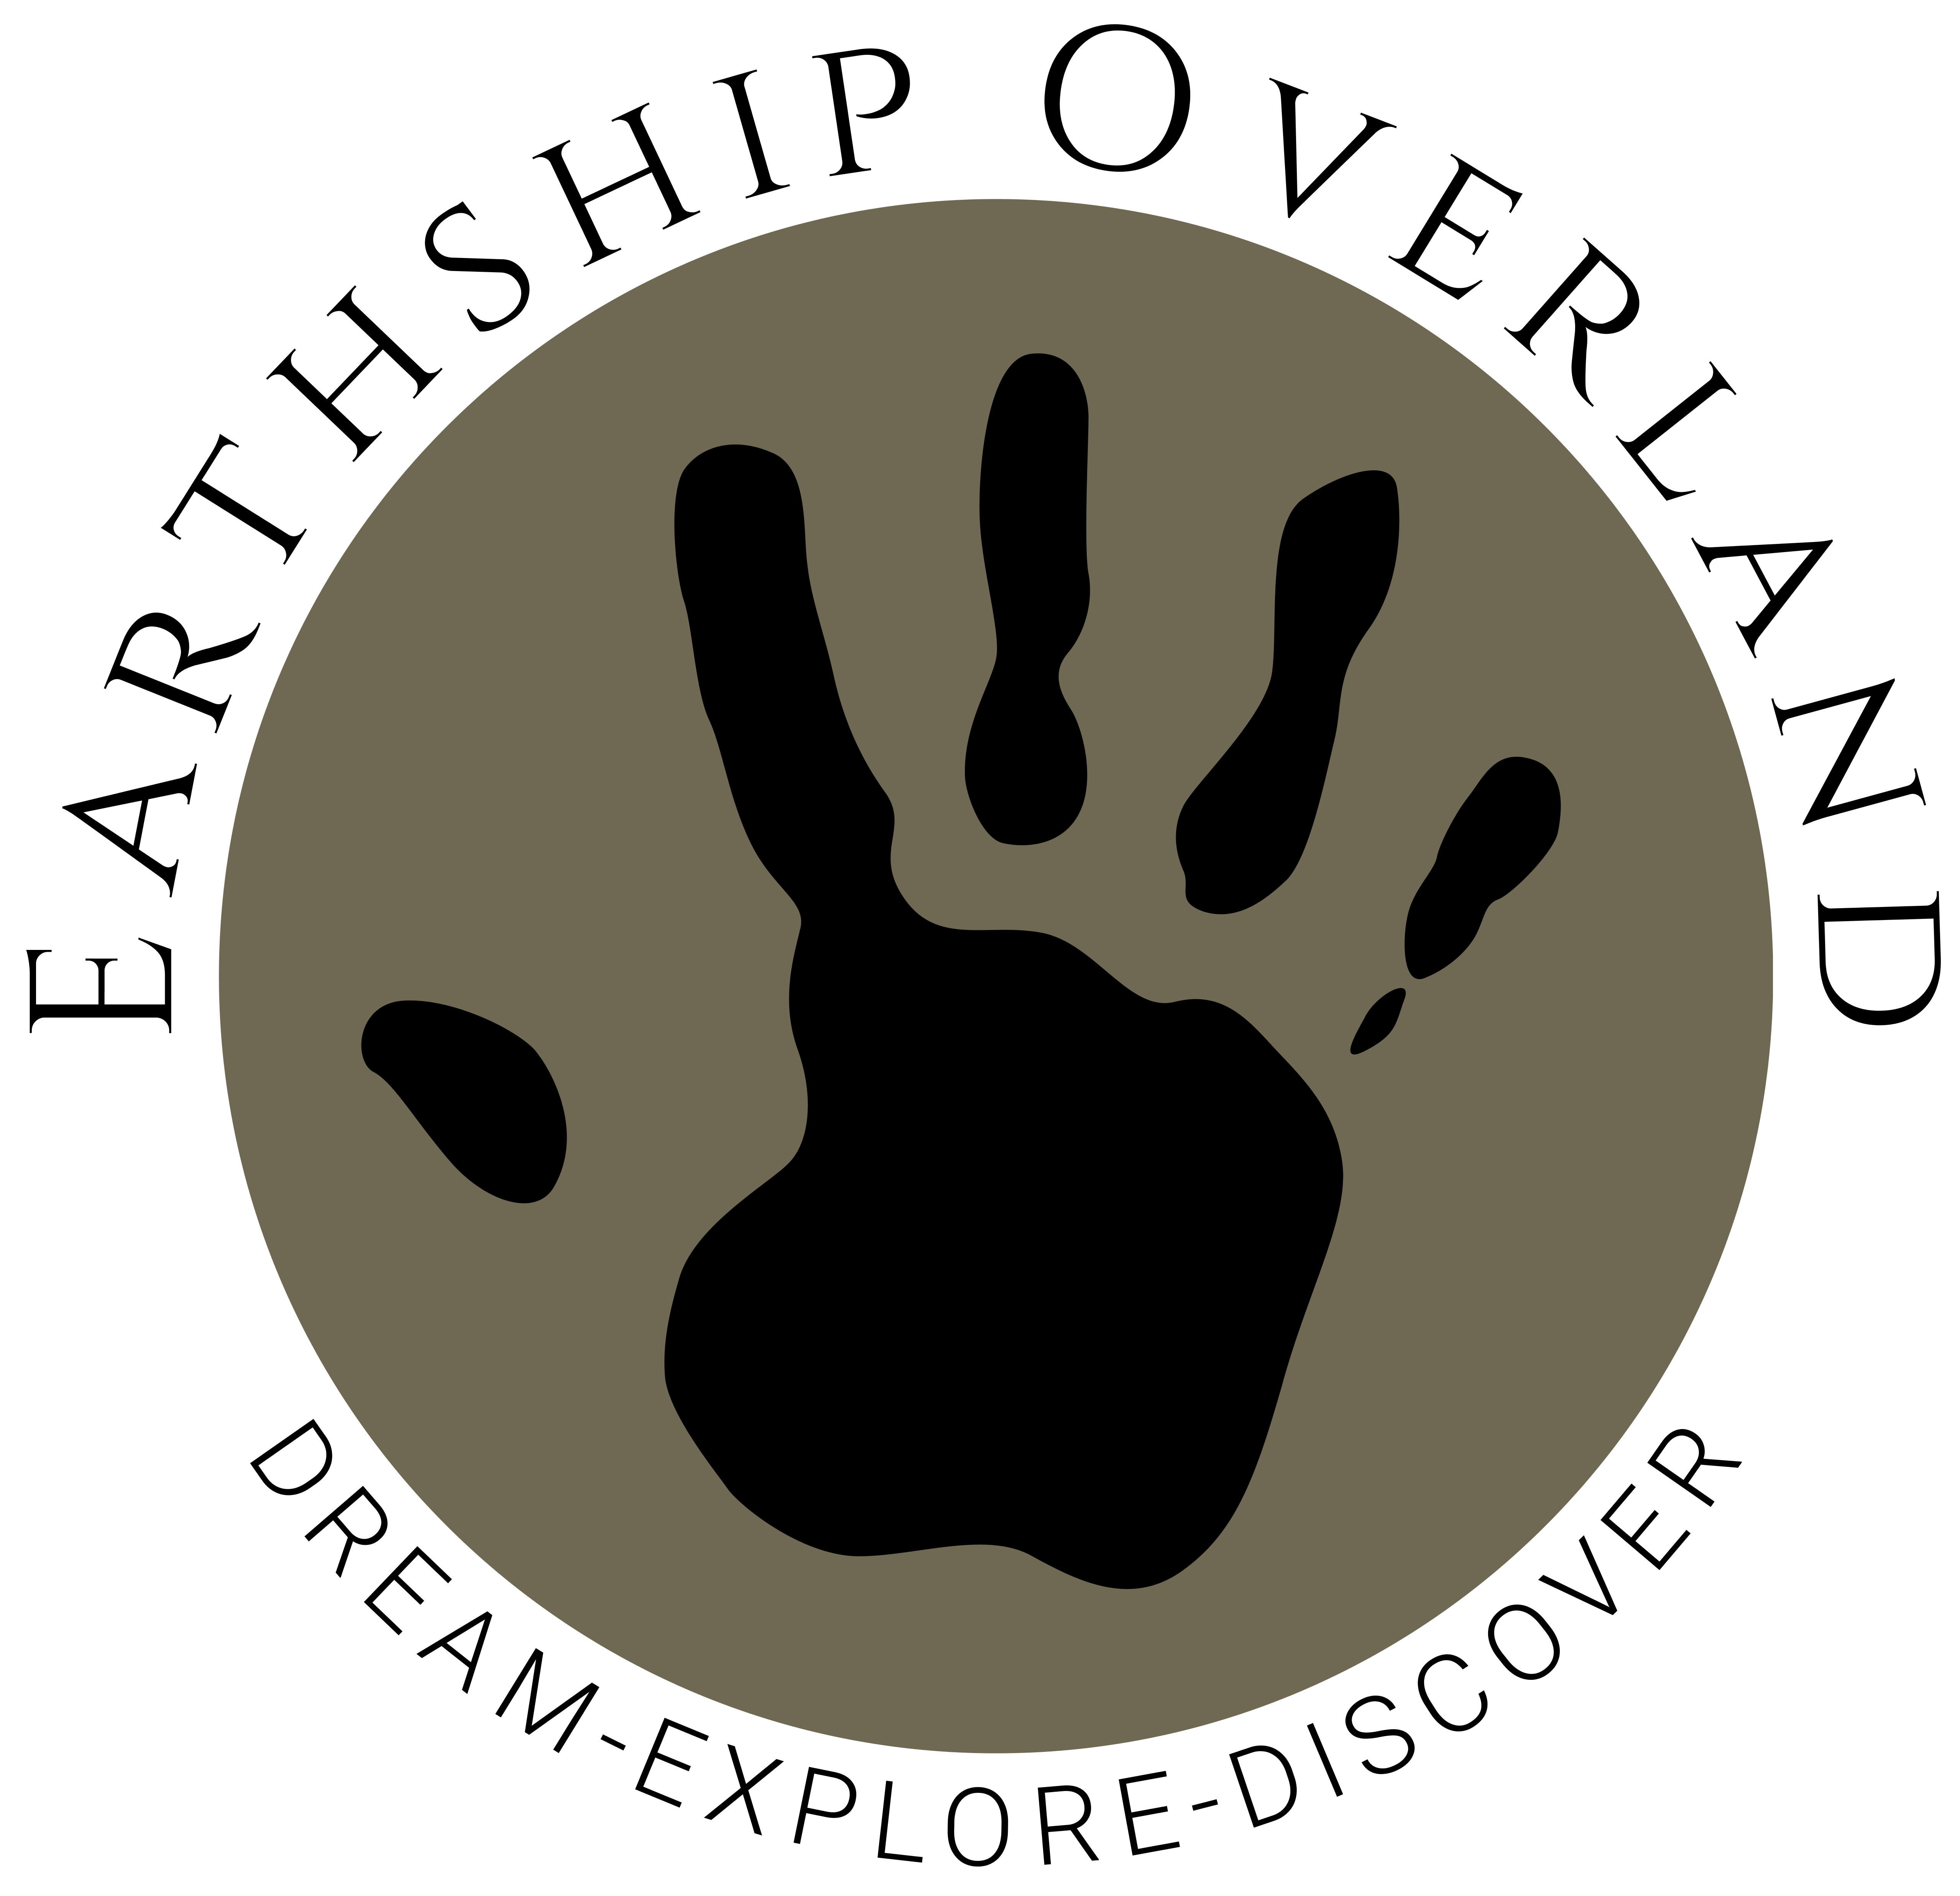 New Dealership: Earthship Overland LLC (EO)